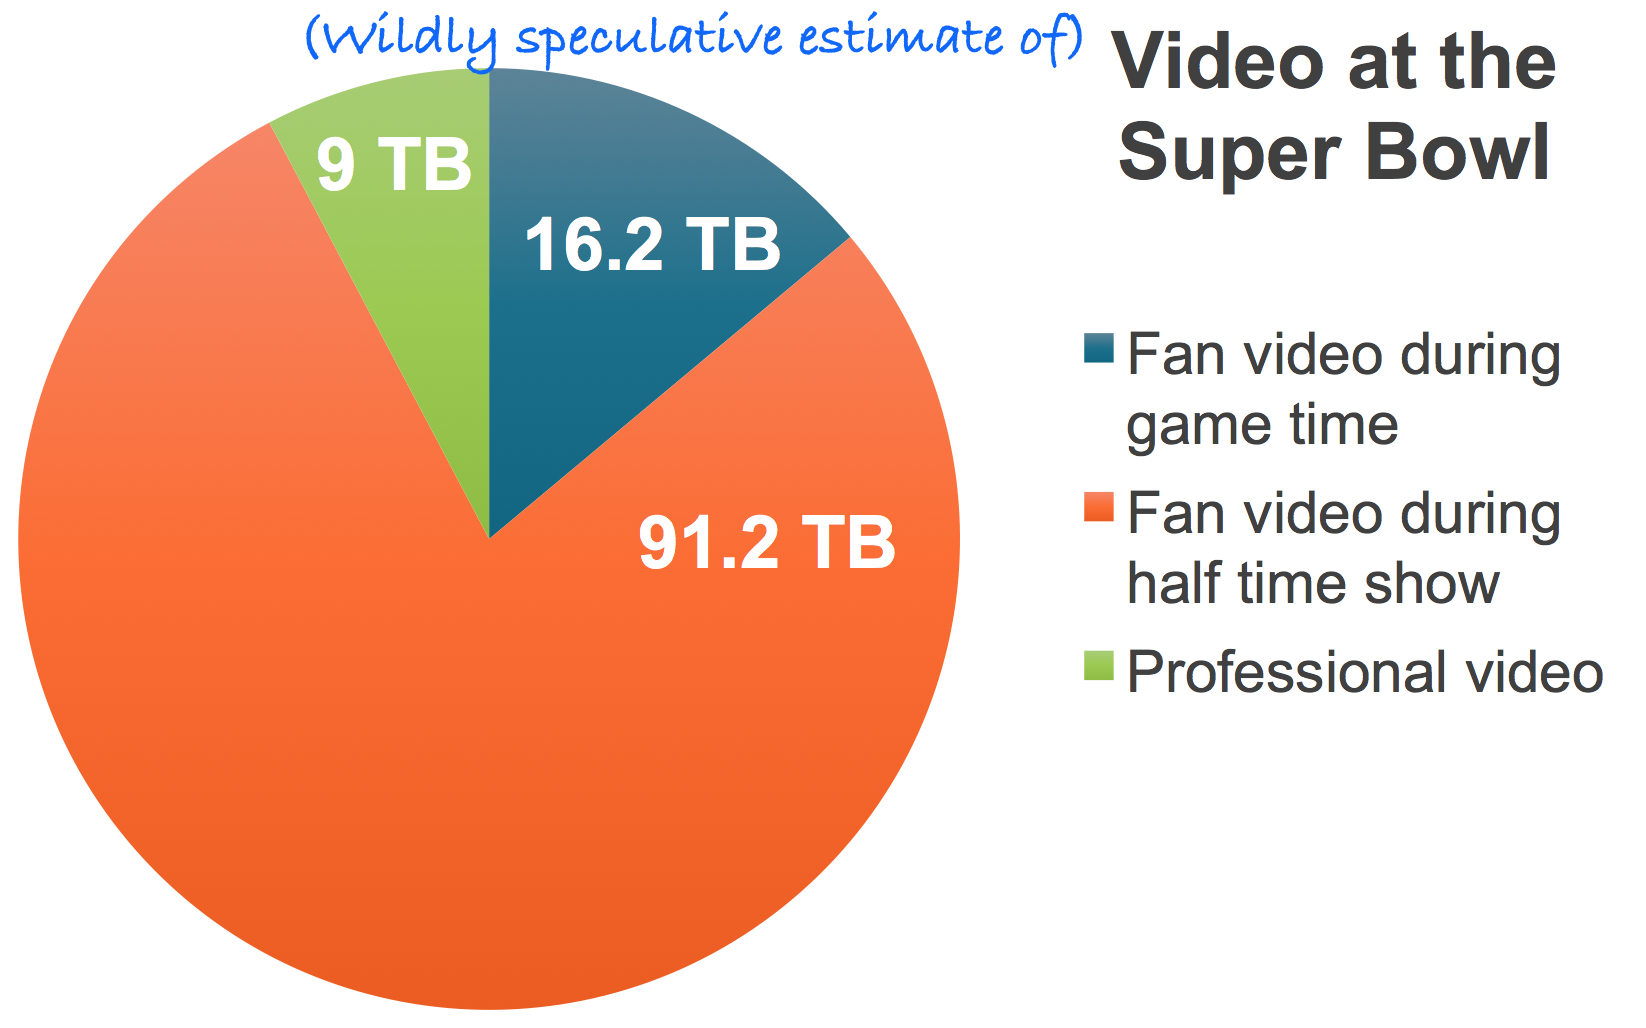 Super Bowl video estimate